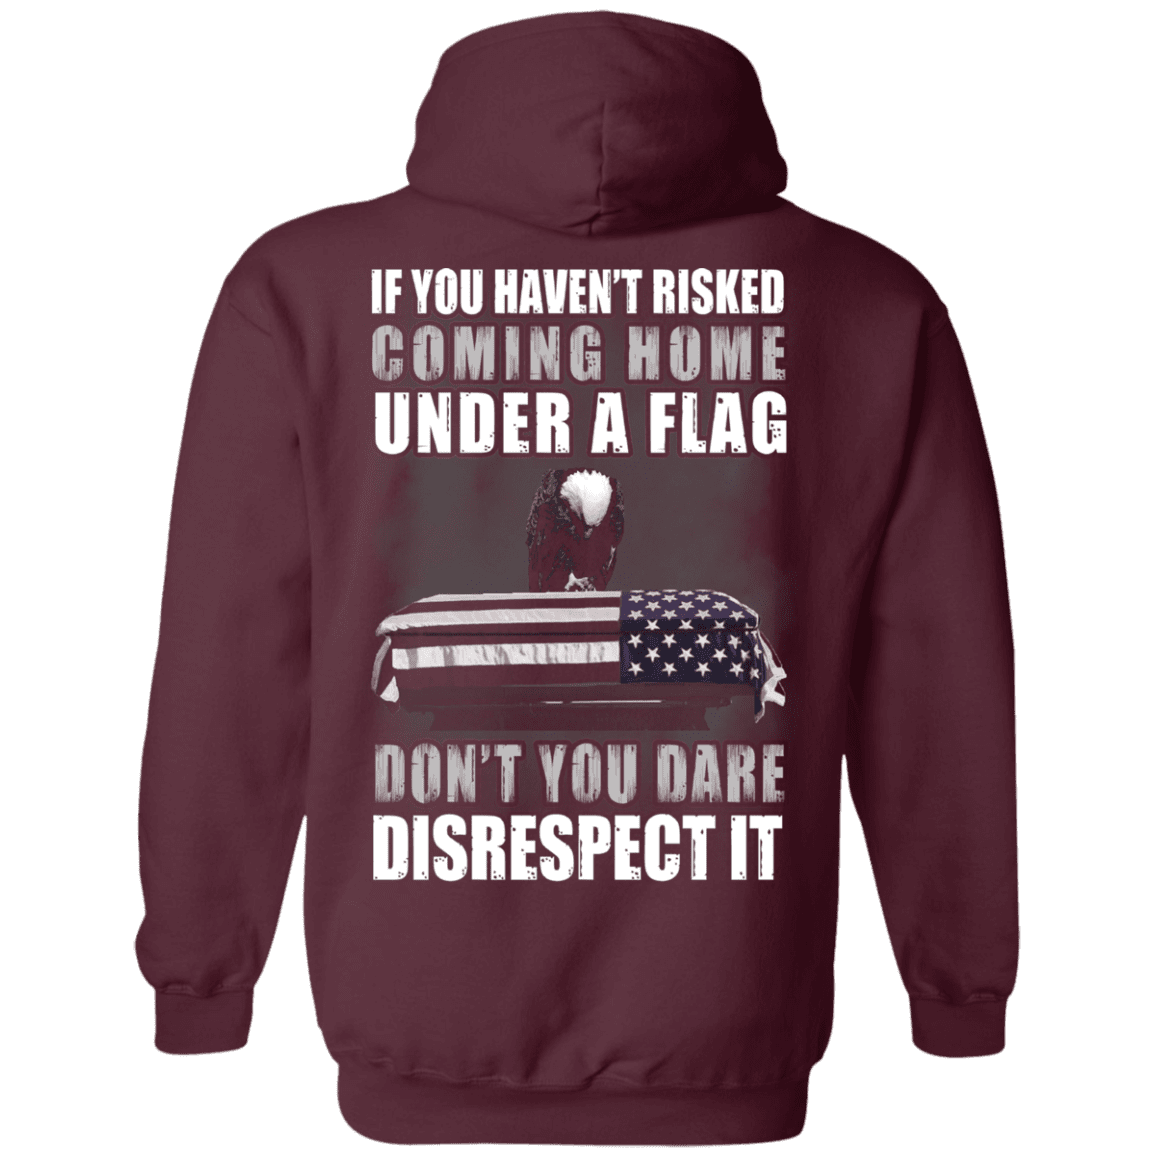 Military T-Shirt "Under A Flag Disrespect It" Men Back-TShirt-General-Veterans Nation